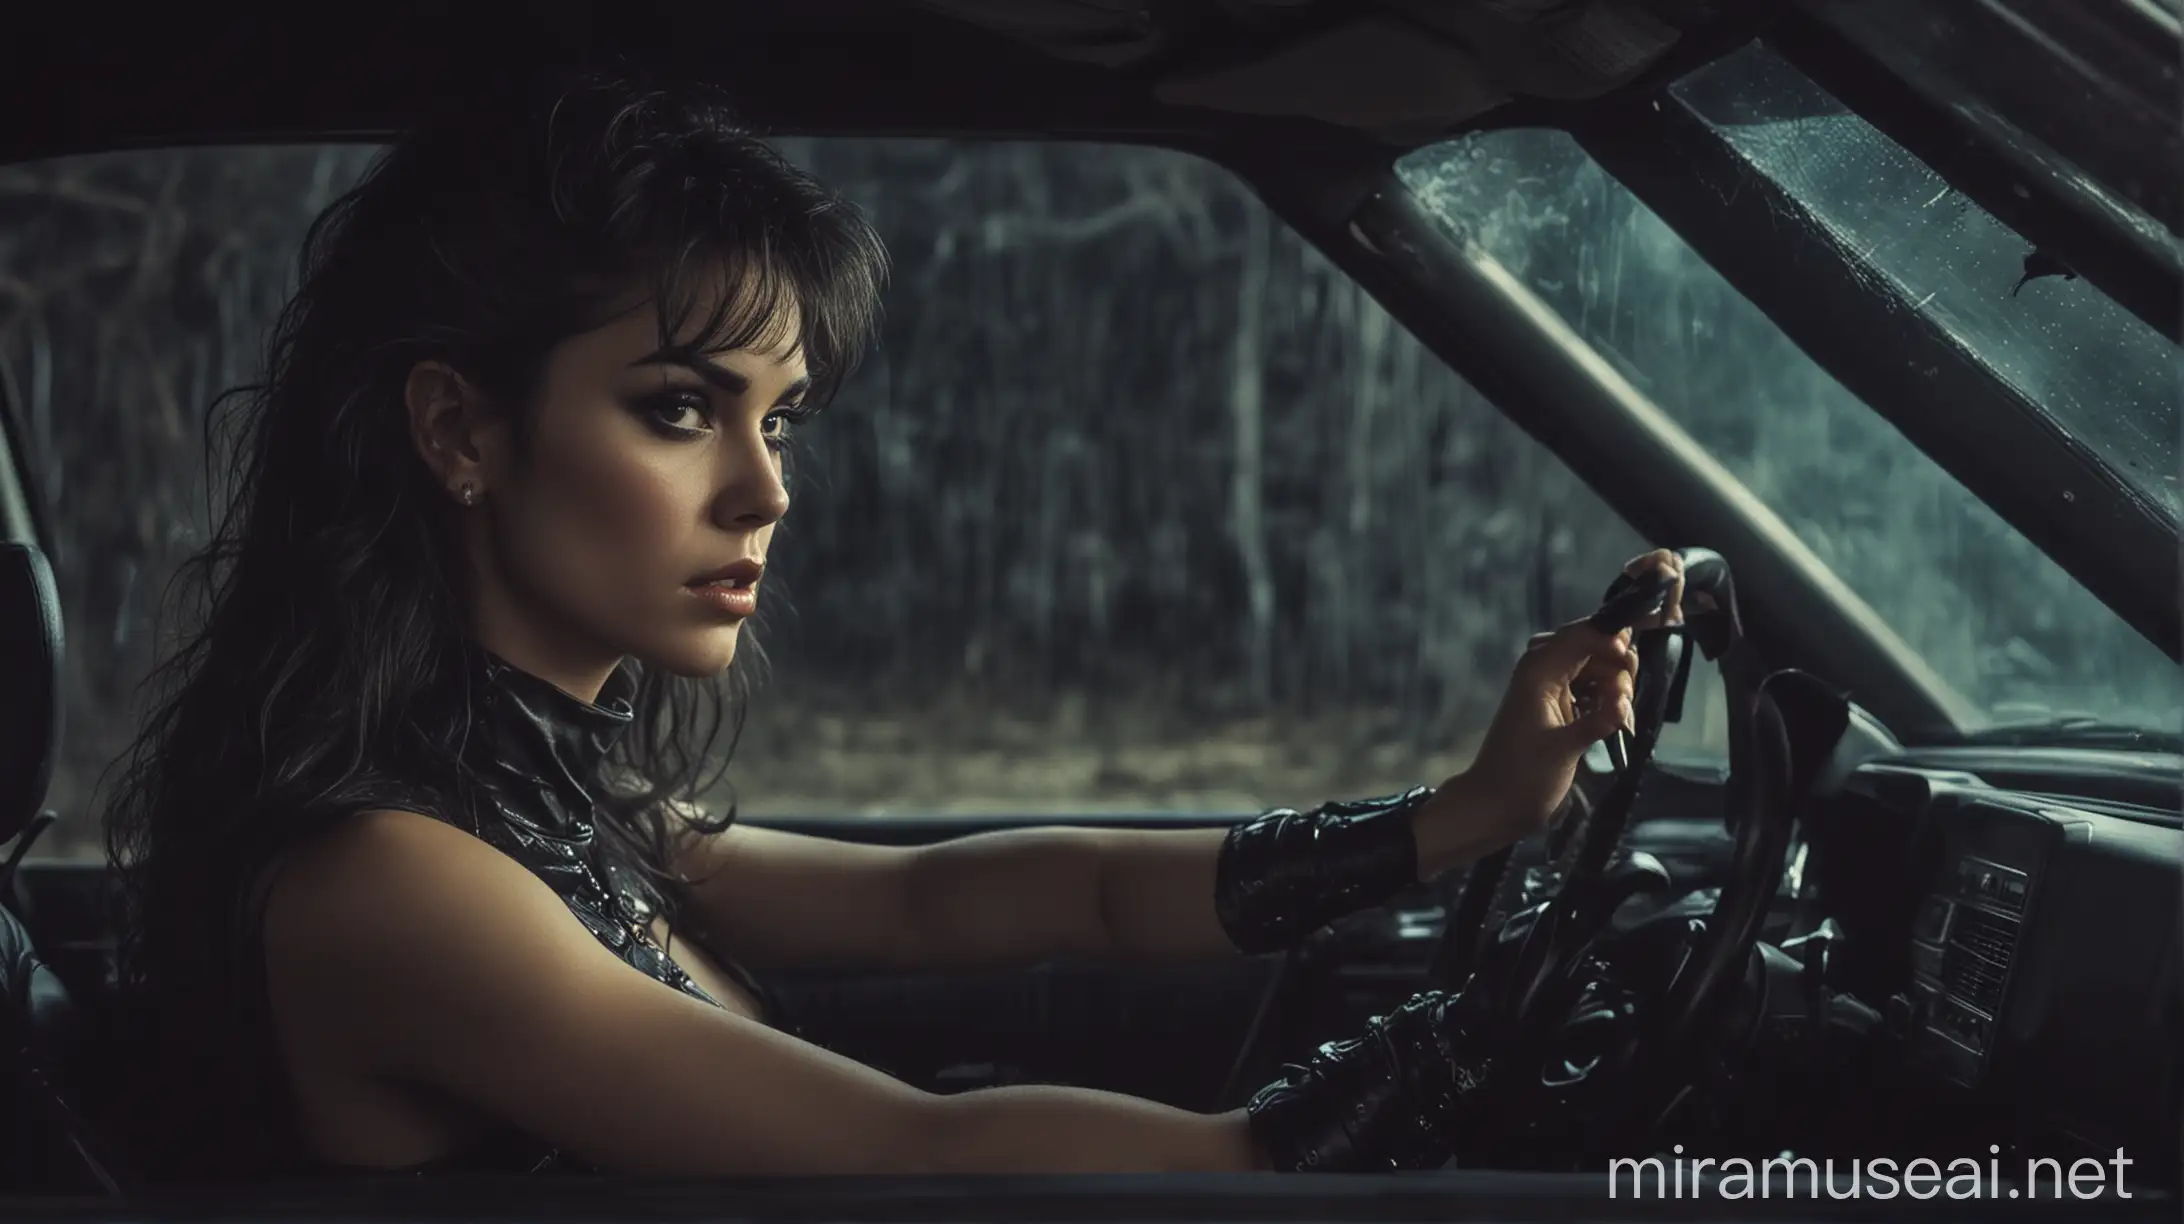 Dark Fantasy Woman Driving 80s Style